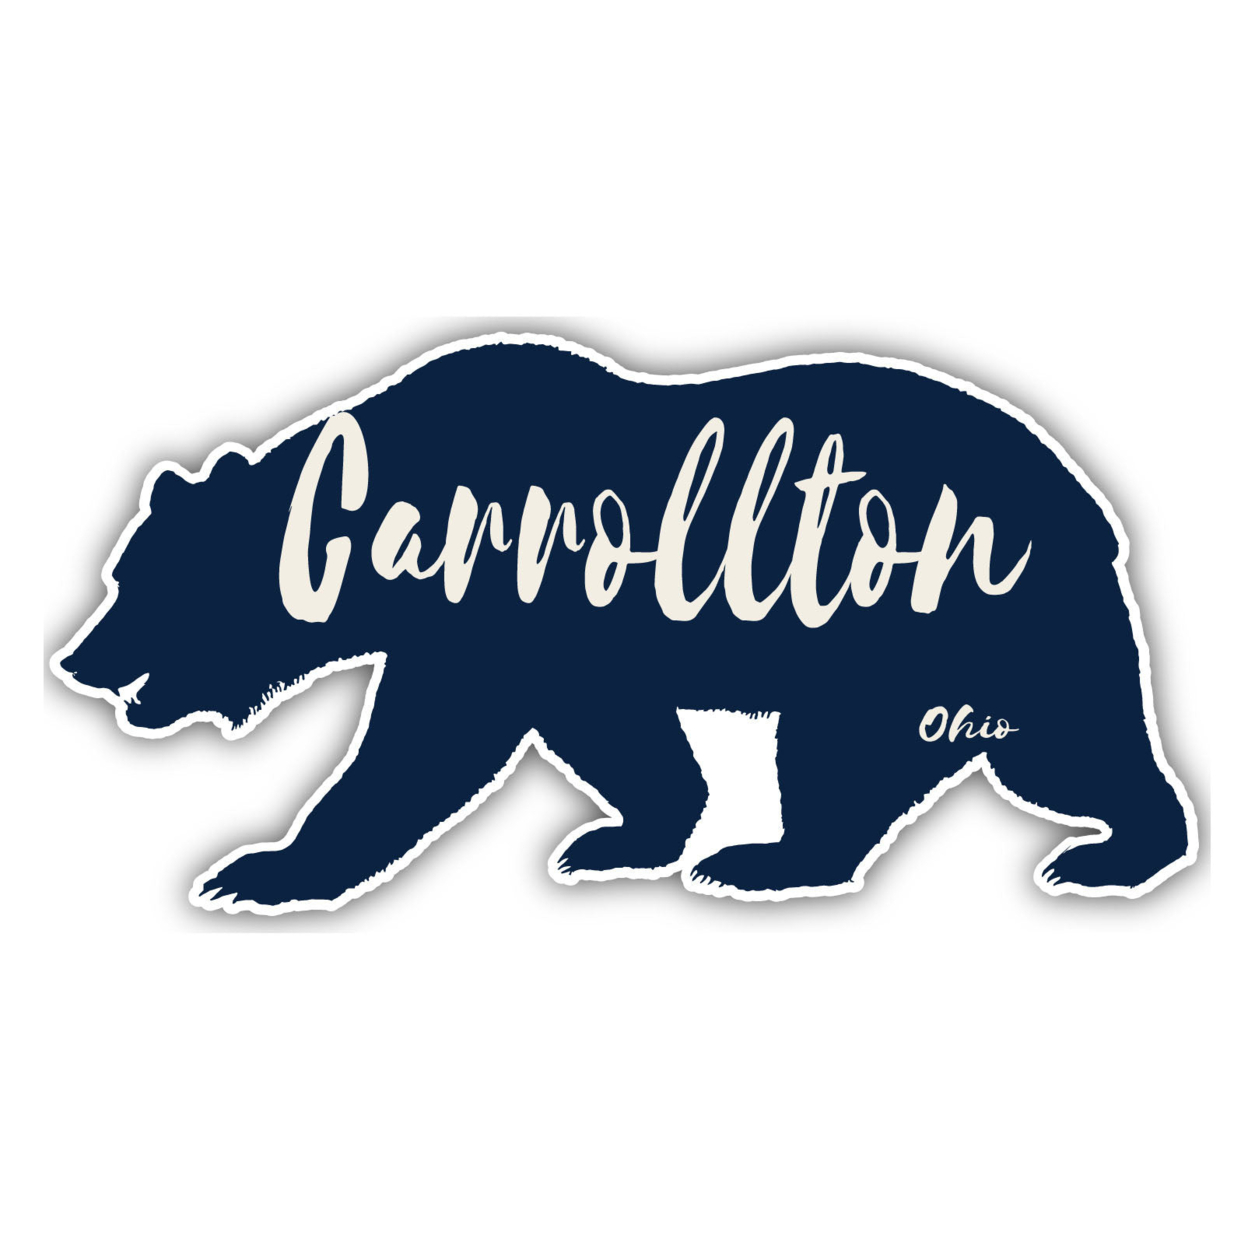 Carrollton Ohio Souvenir Decorative Stickers (Choose Theme And Size) - Single Unit, 2-Inch, Bear